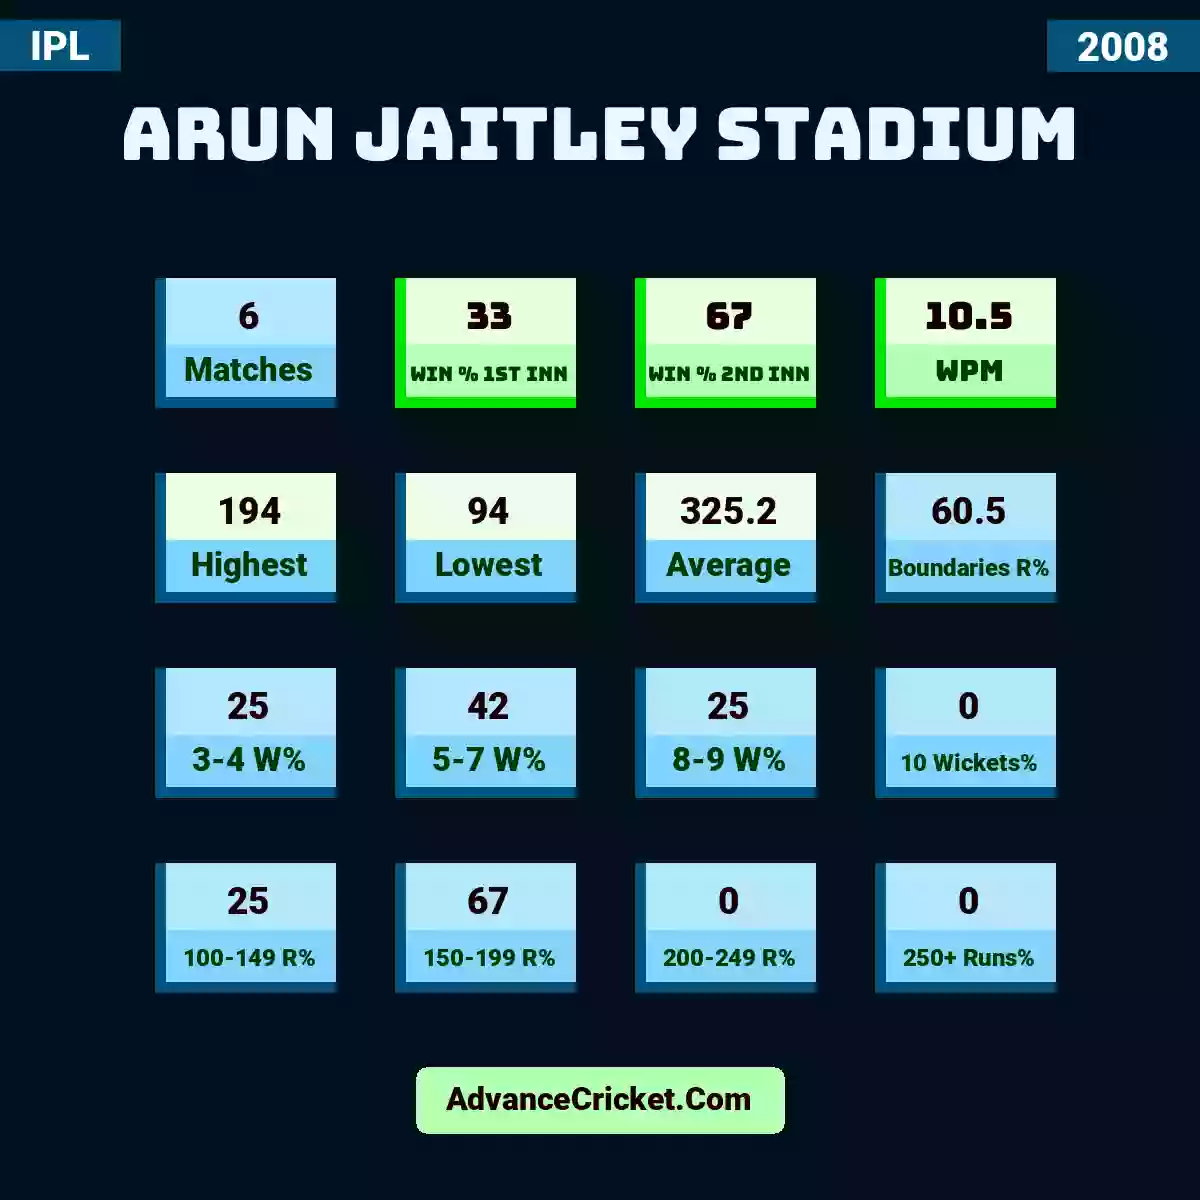 Image showing Arun Jaitley Stadium with Matches: 6, Win % 1st Inn: 33, Win % 2nd Inn: 67, WPM: 10.5, Highest: 194, Lowest: 94, Average: 325.2, Boundaries R%: 60.5, 3-4 W%: 25, 5-7 W%: 42, 8-9 W%: 25, 10 Wickets%: 0, 100-149 R%: 25, 150-199 R%: 67, 200-249 R%: 0, 250+ Runs%: 0.